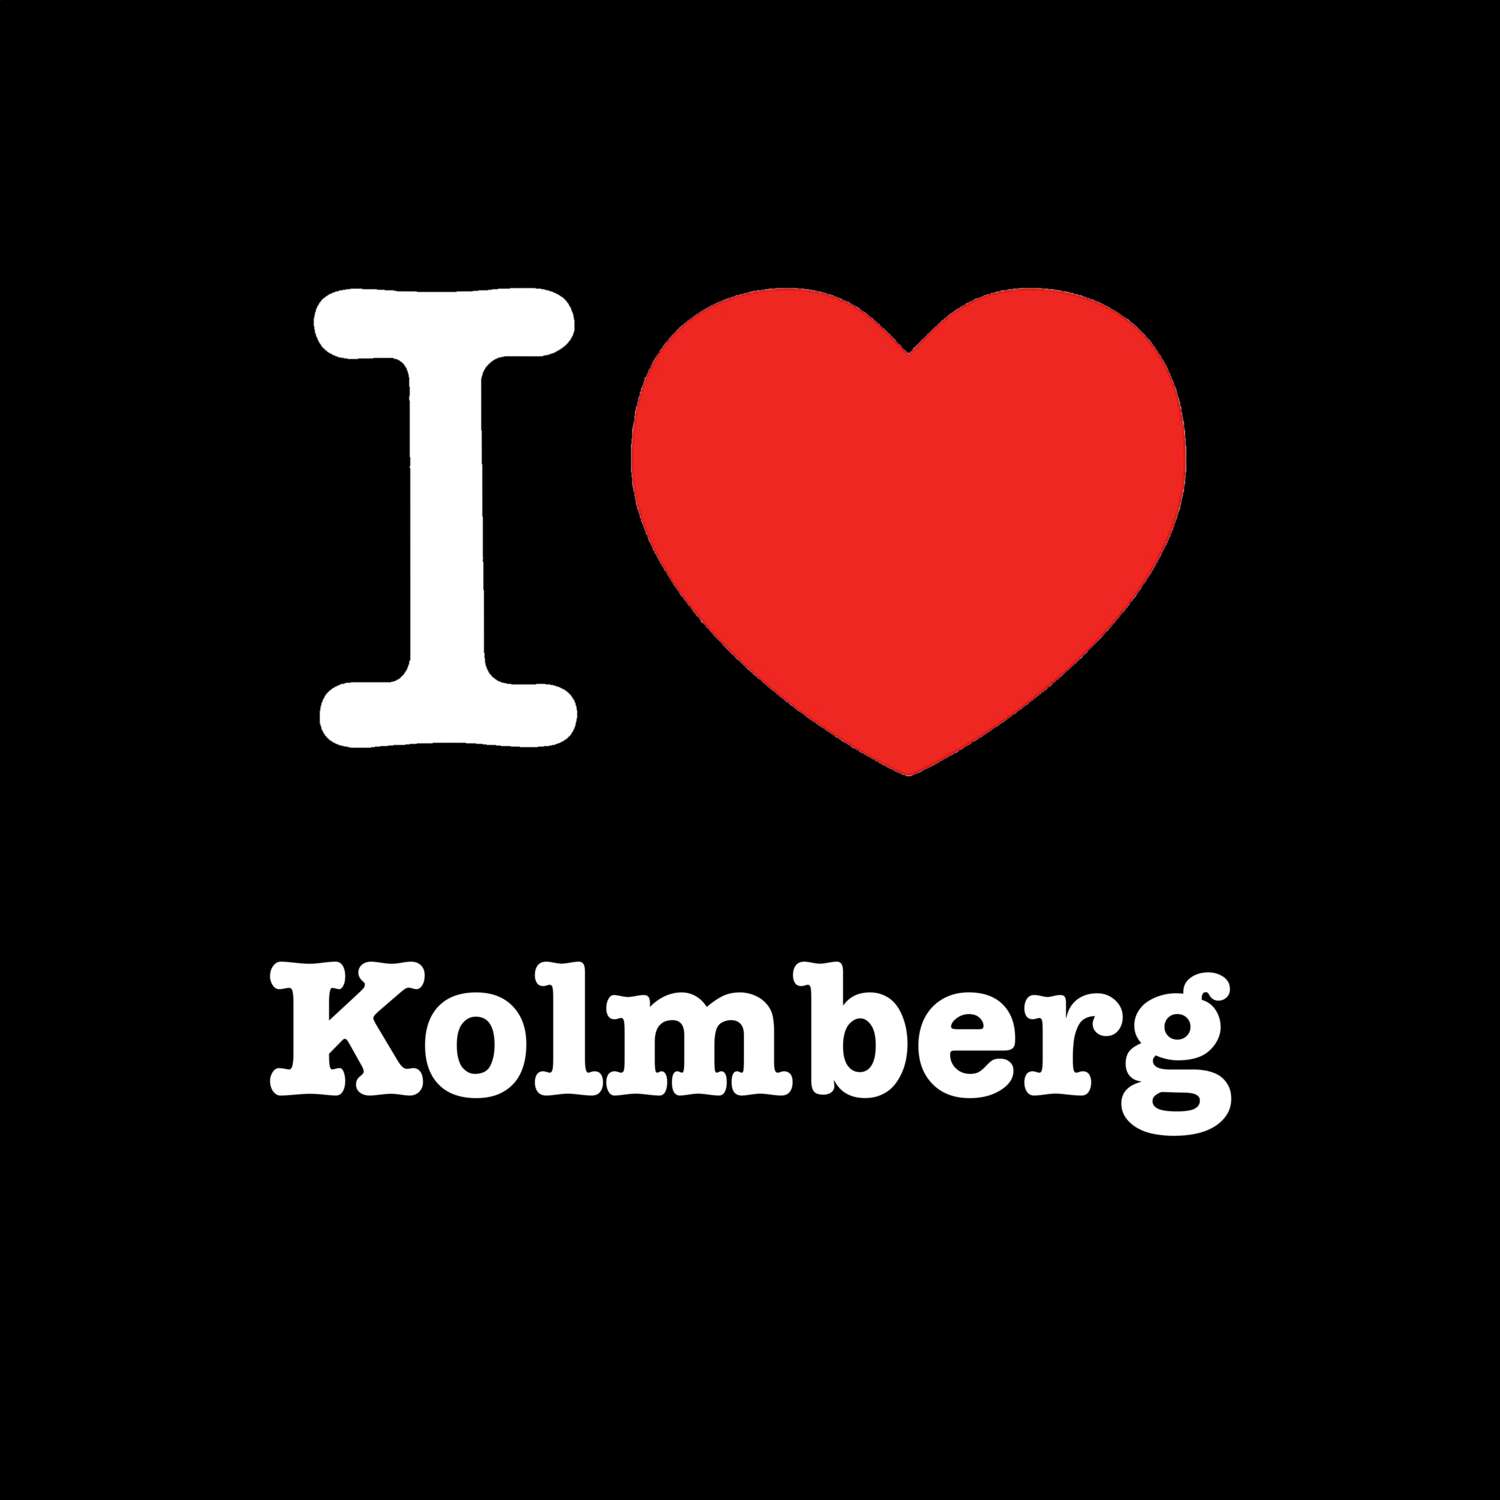 Kolmberg T-Shirt »I love«